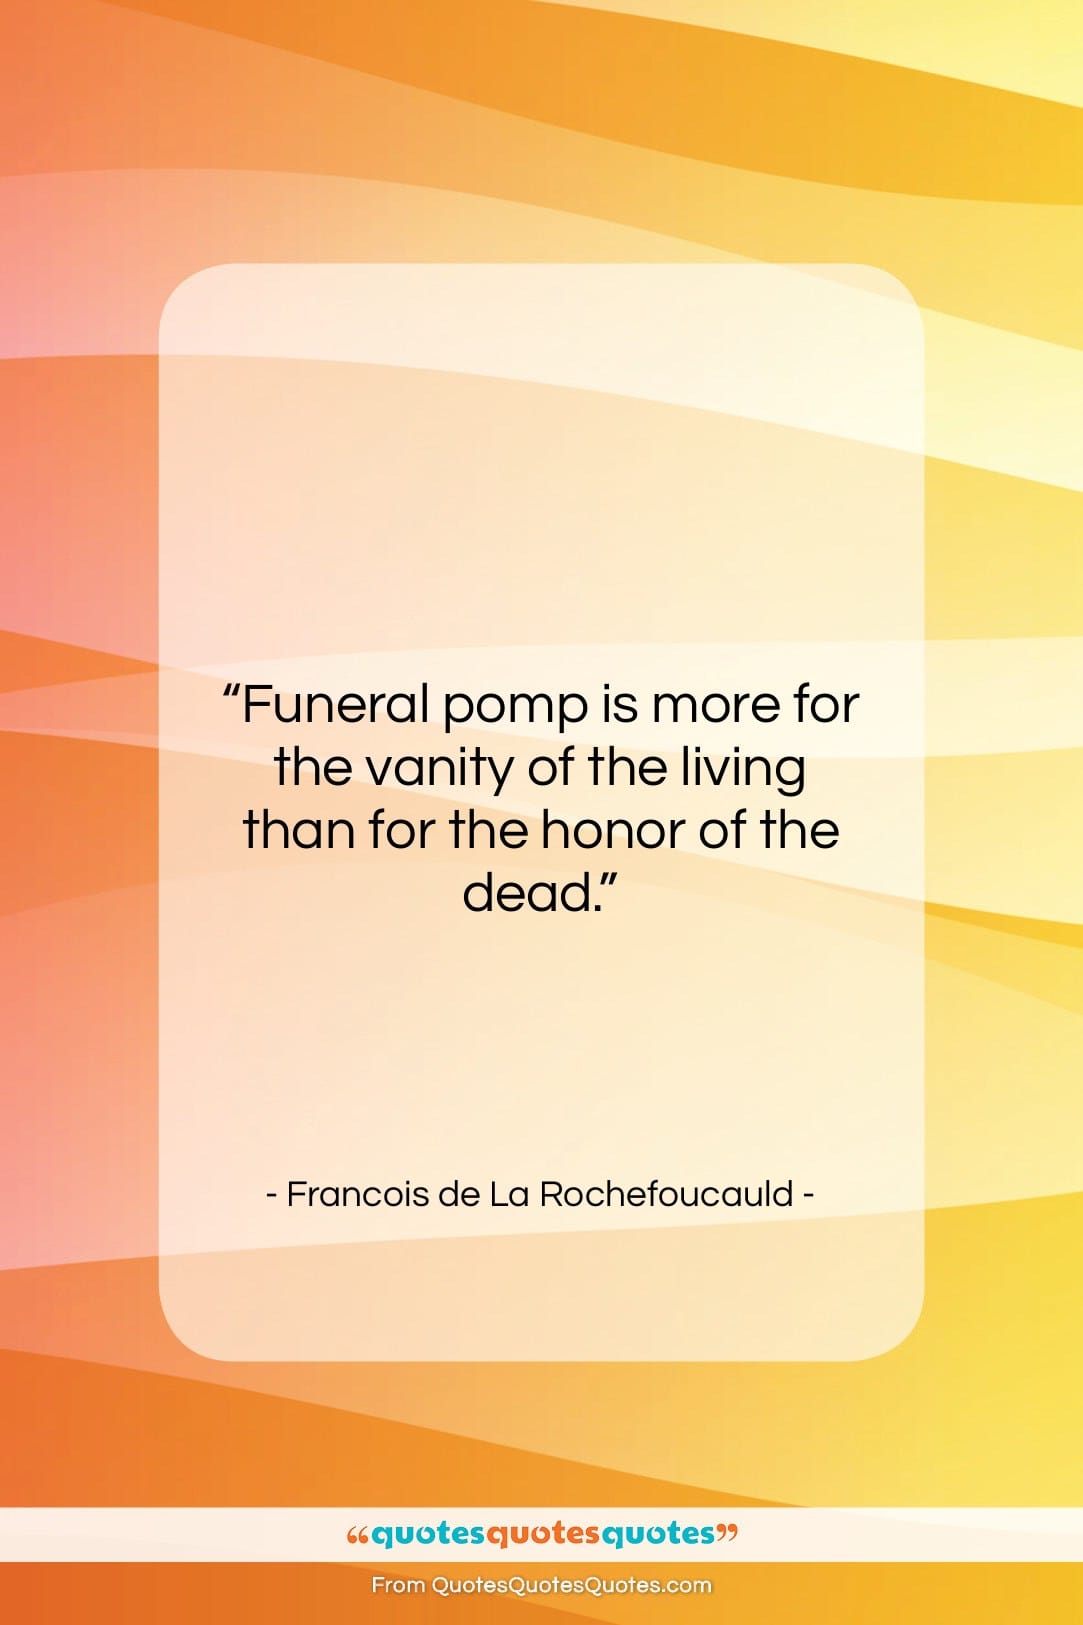 Francois de La Rochefoucauld quote: “Funeral pomp is more for the vanity…”- at QuotesQuotesQuotes.com